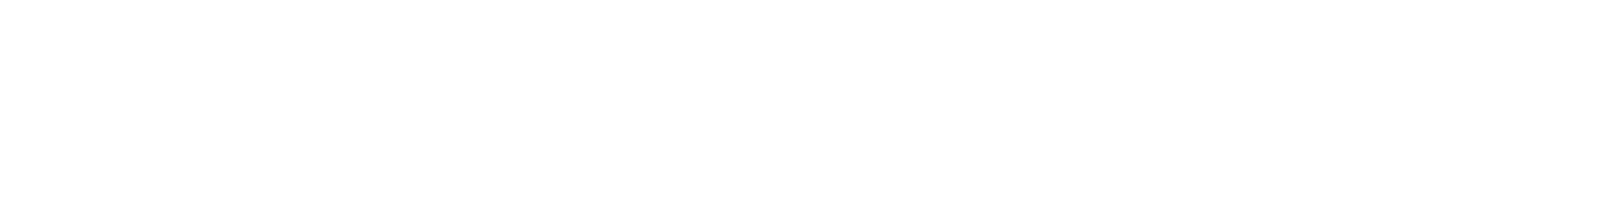 3play media logo